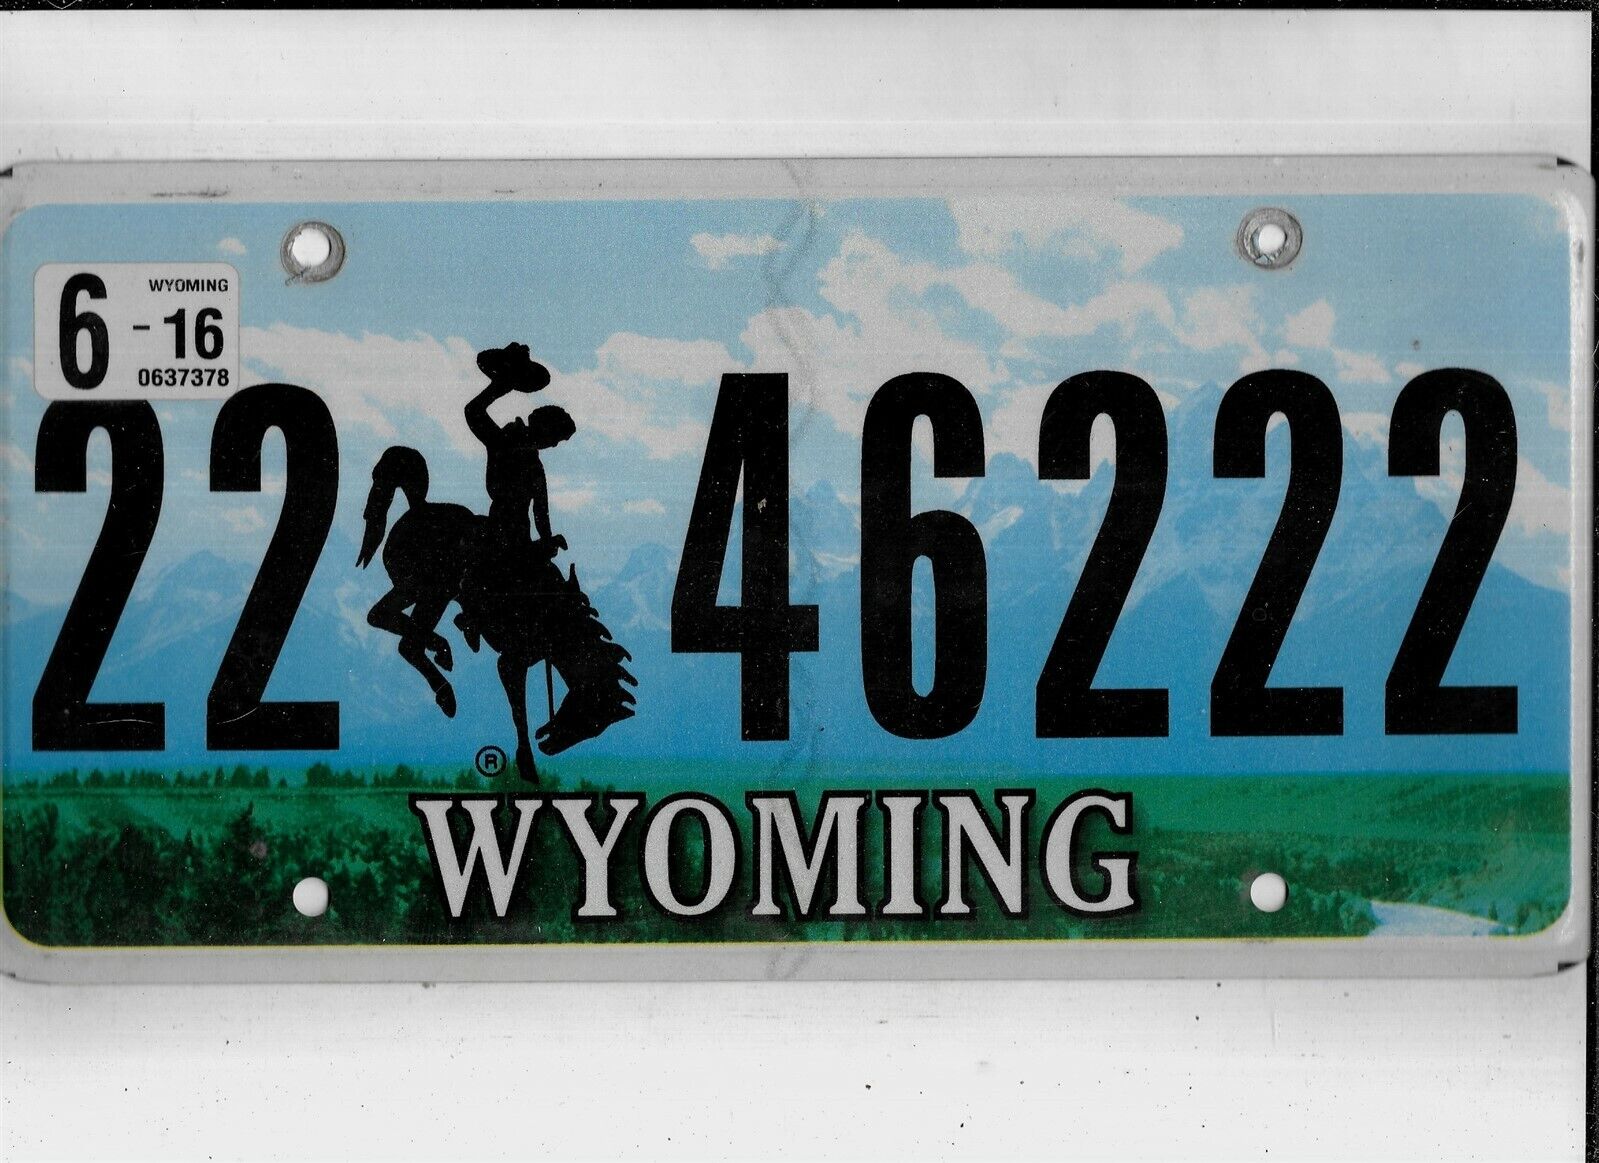 WYOMING passenger 2016 license plate \